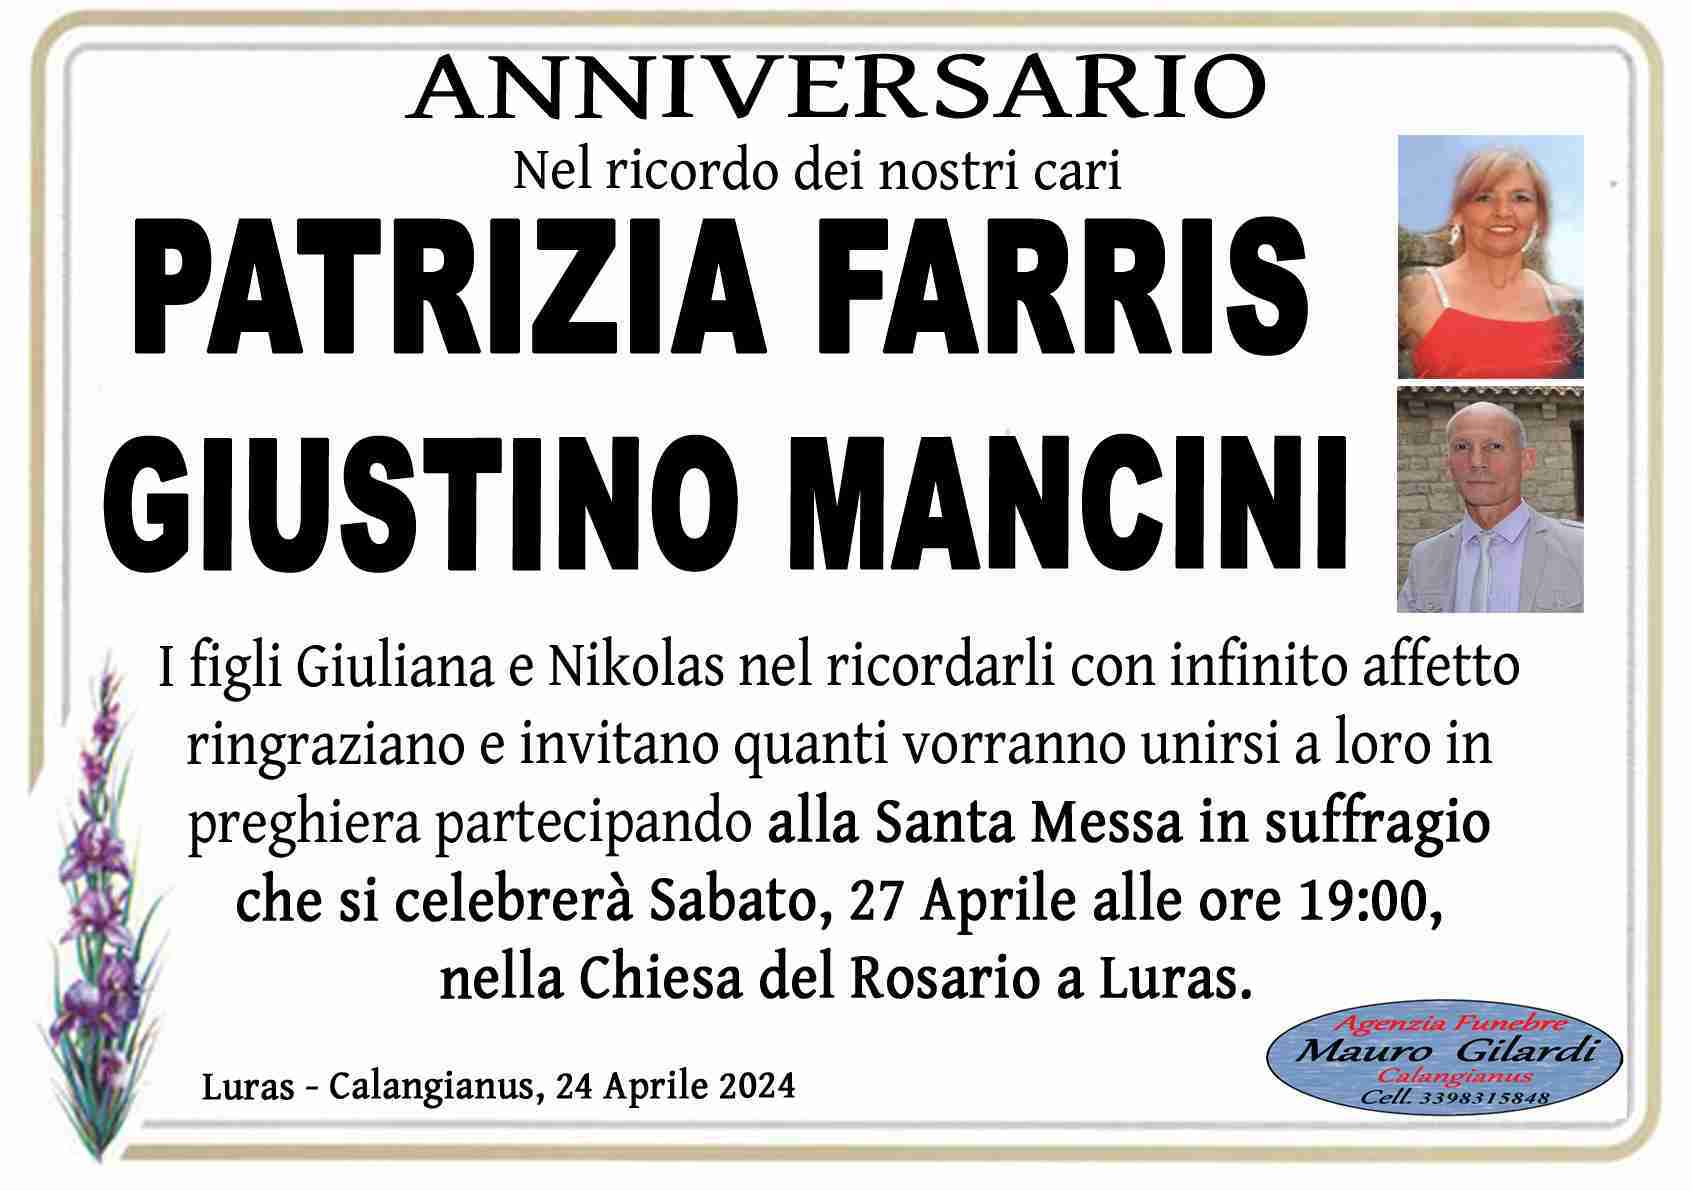 Patrizia Farris e Giustino Mancini